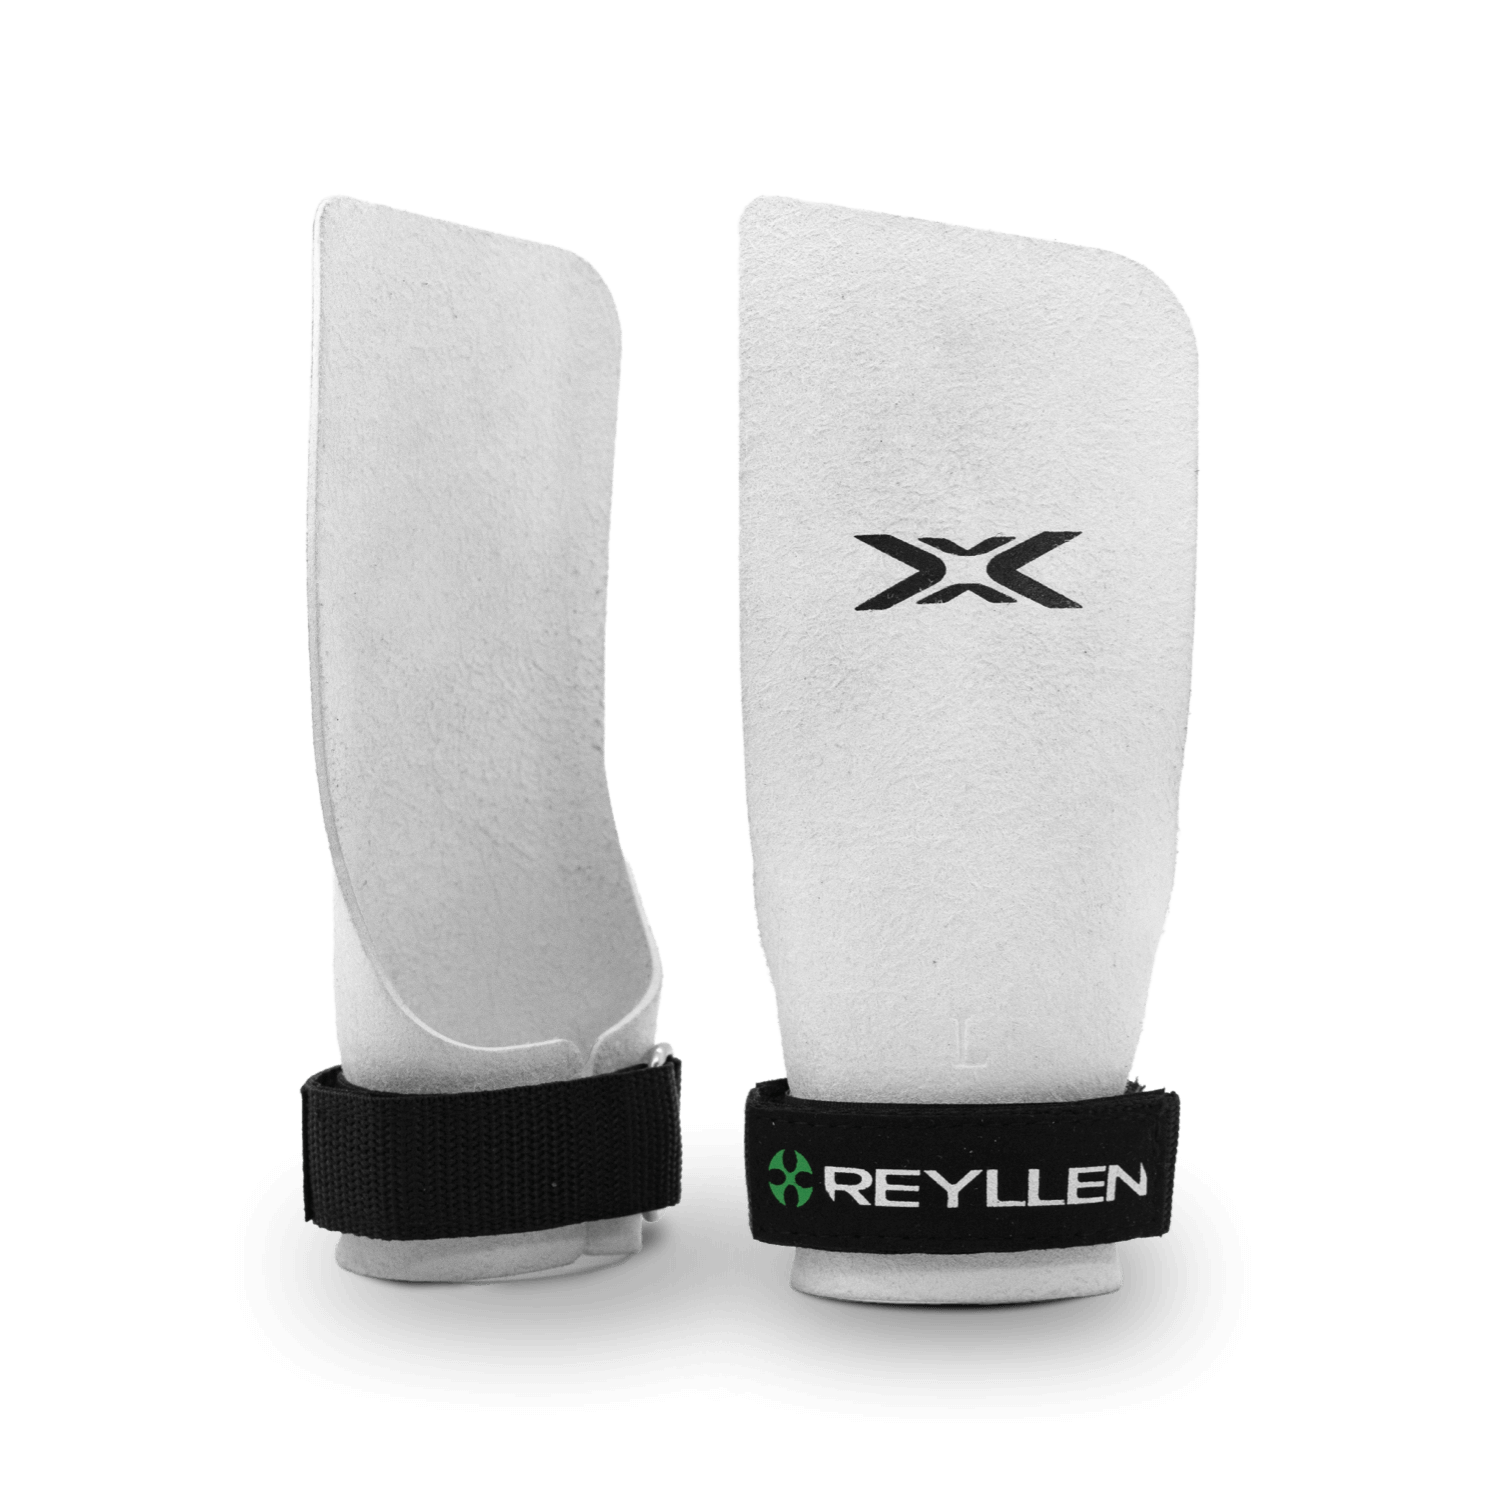 Reyllen Panda Microfibre Crossfit Gymnastic Hand Grips - Feature PNG image